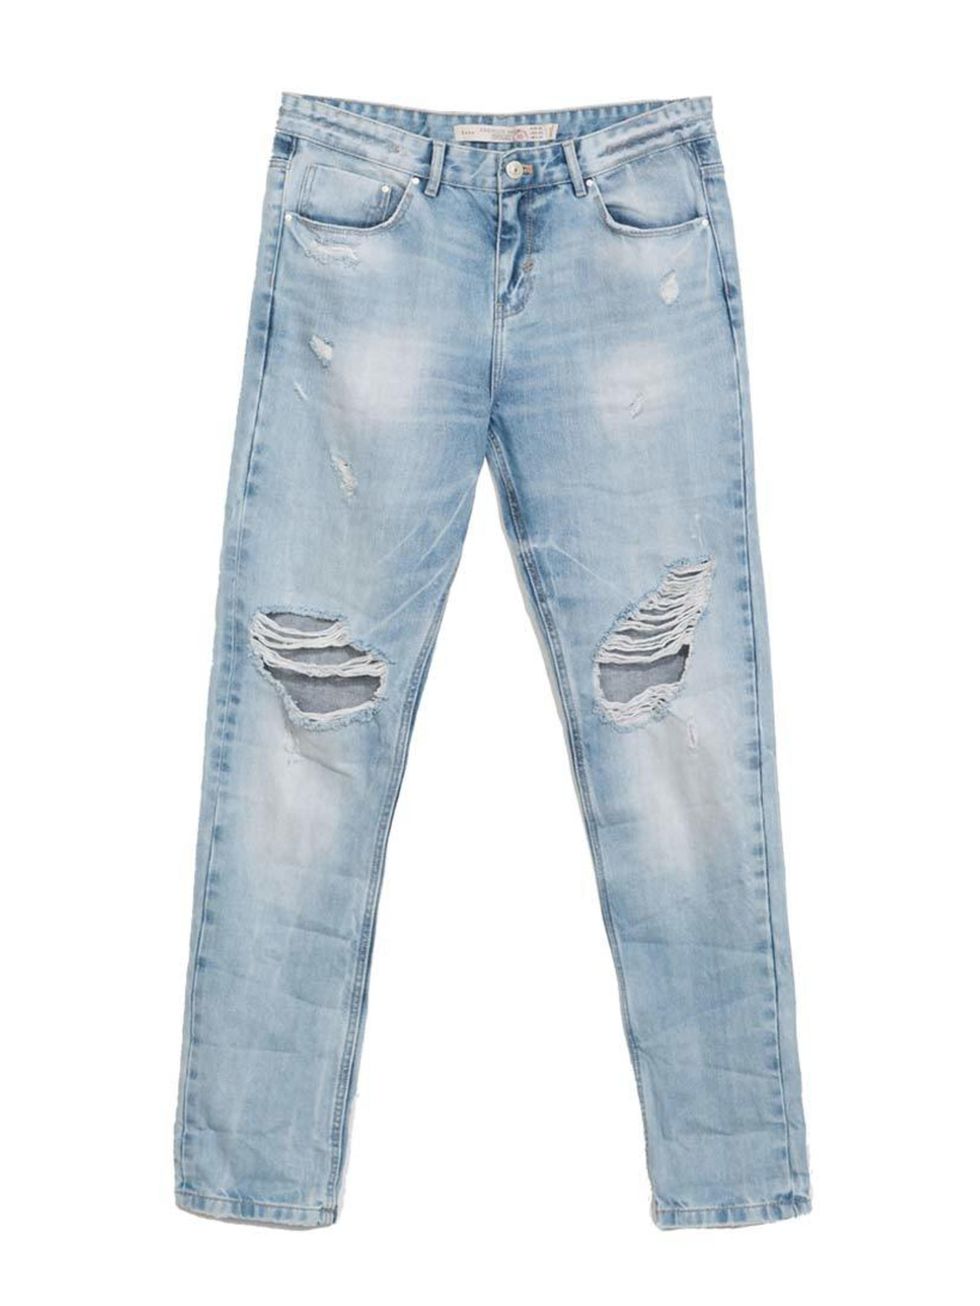 <p><a href="http://www.zara.com/uk/en/woman/jeans/trf/peg-leg-distressed-denim-c431510p1667350.html">Zara</a> jeans, £29.99</p>